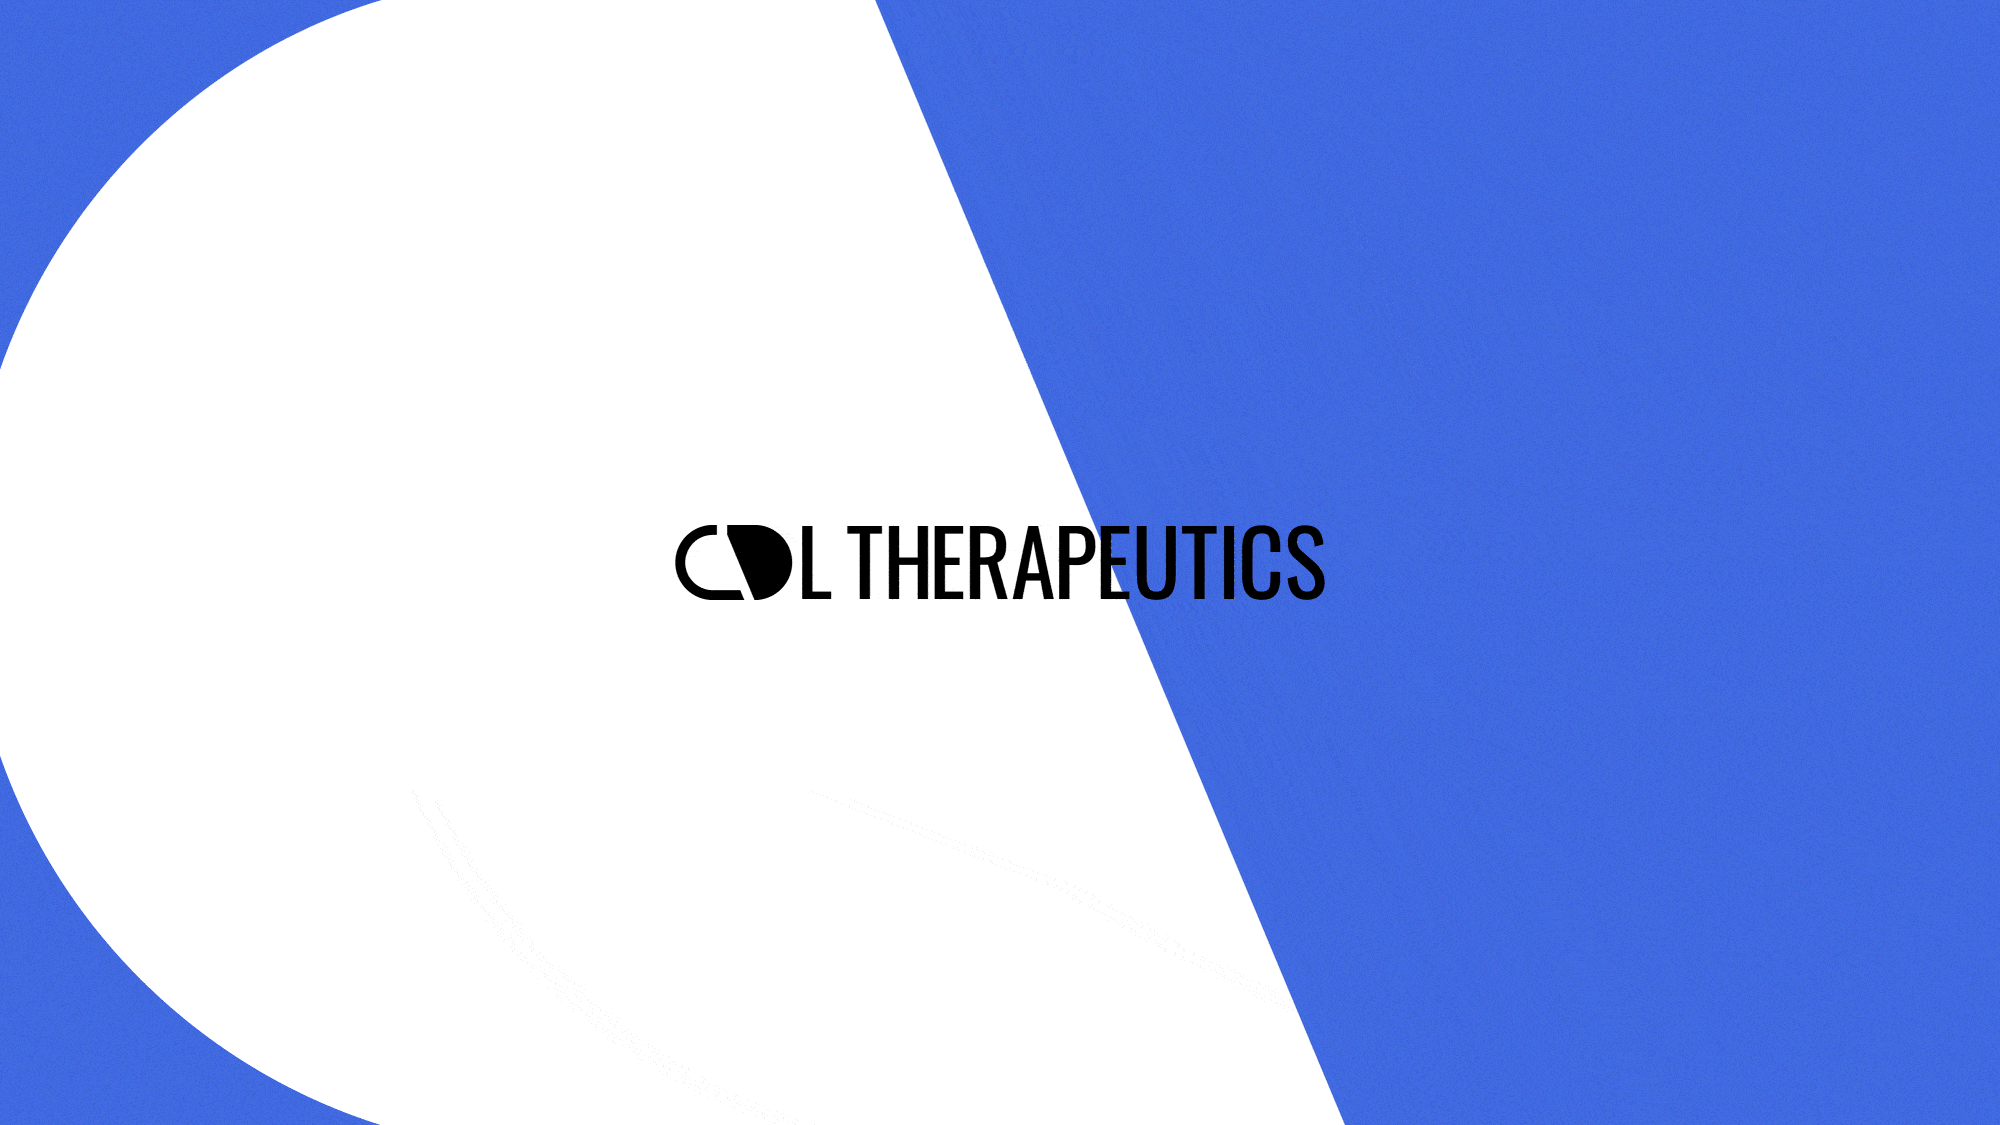 CDL Therapeutics Identity